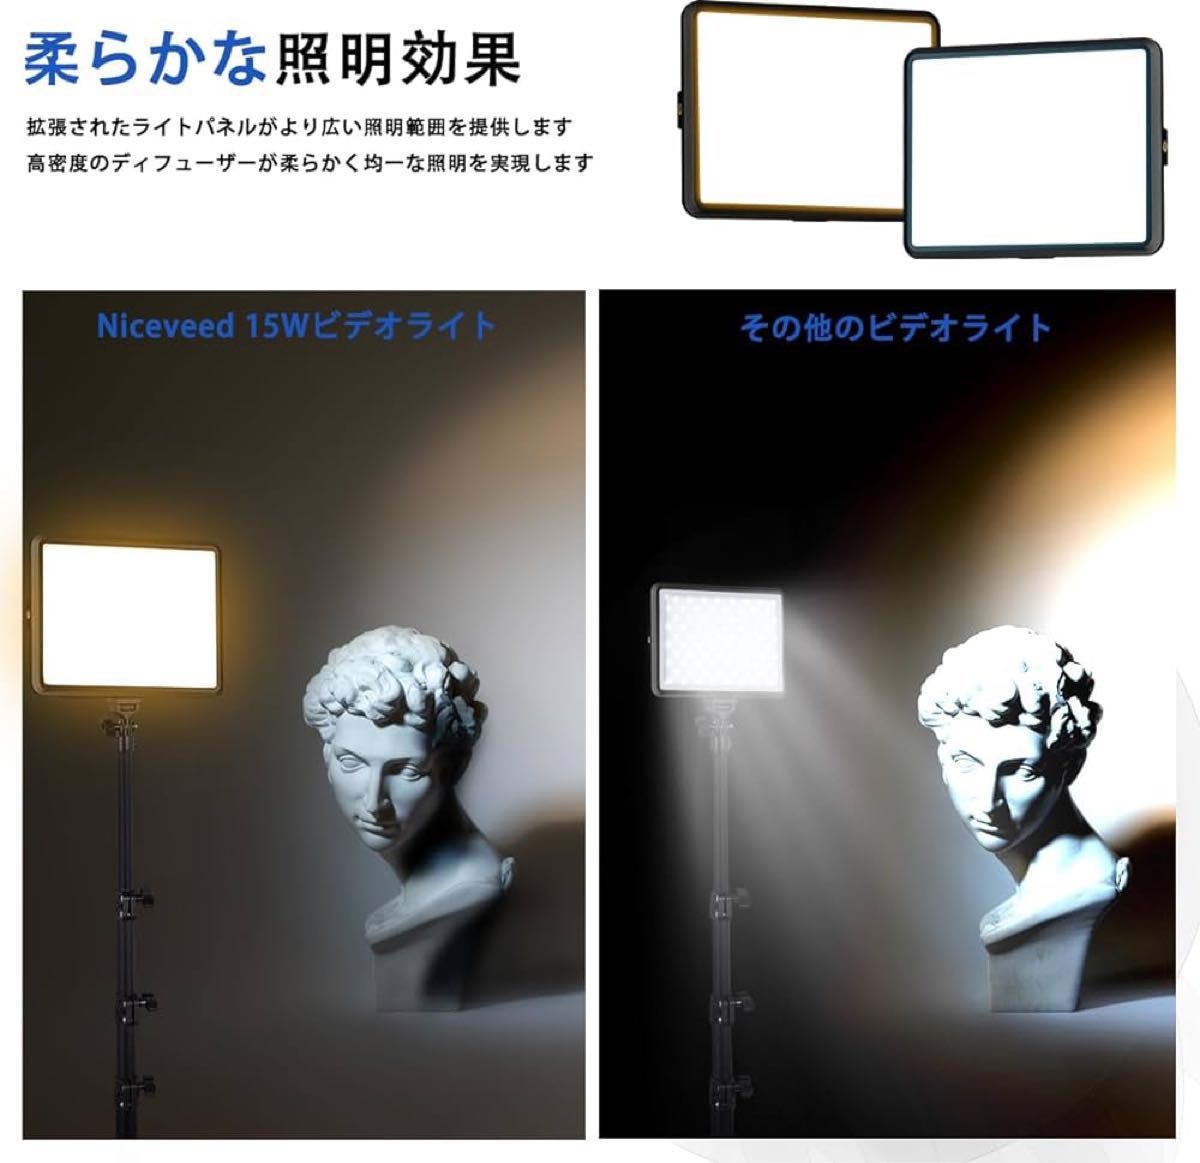 NiceVeedi 2パック撮影用ライト LEDビデオライト 写真スタジオ撮影